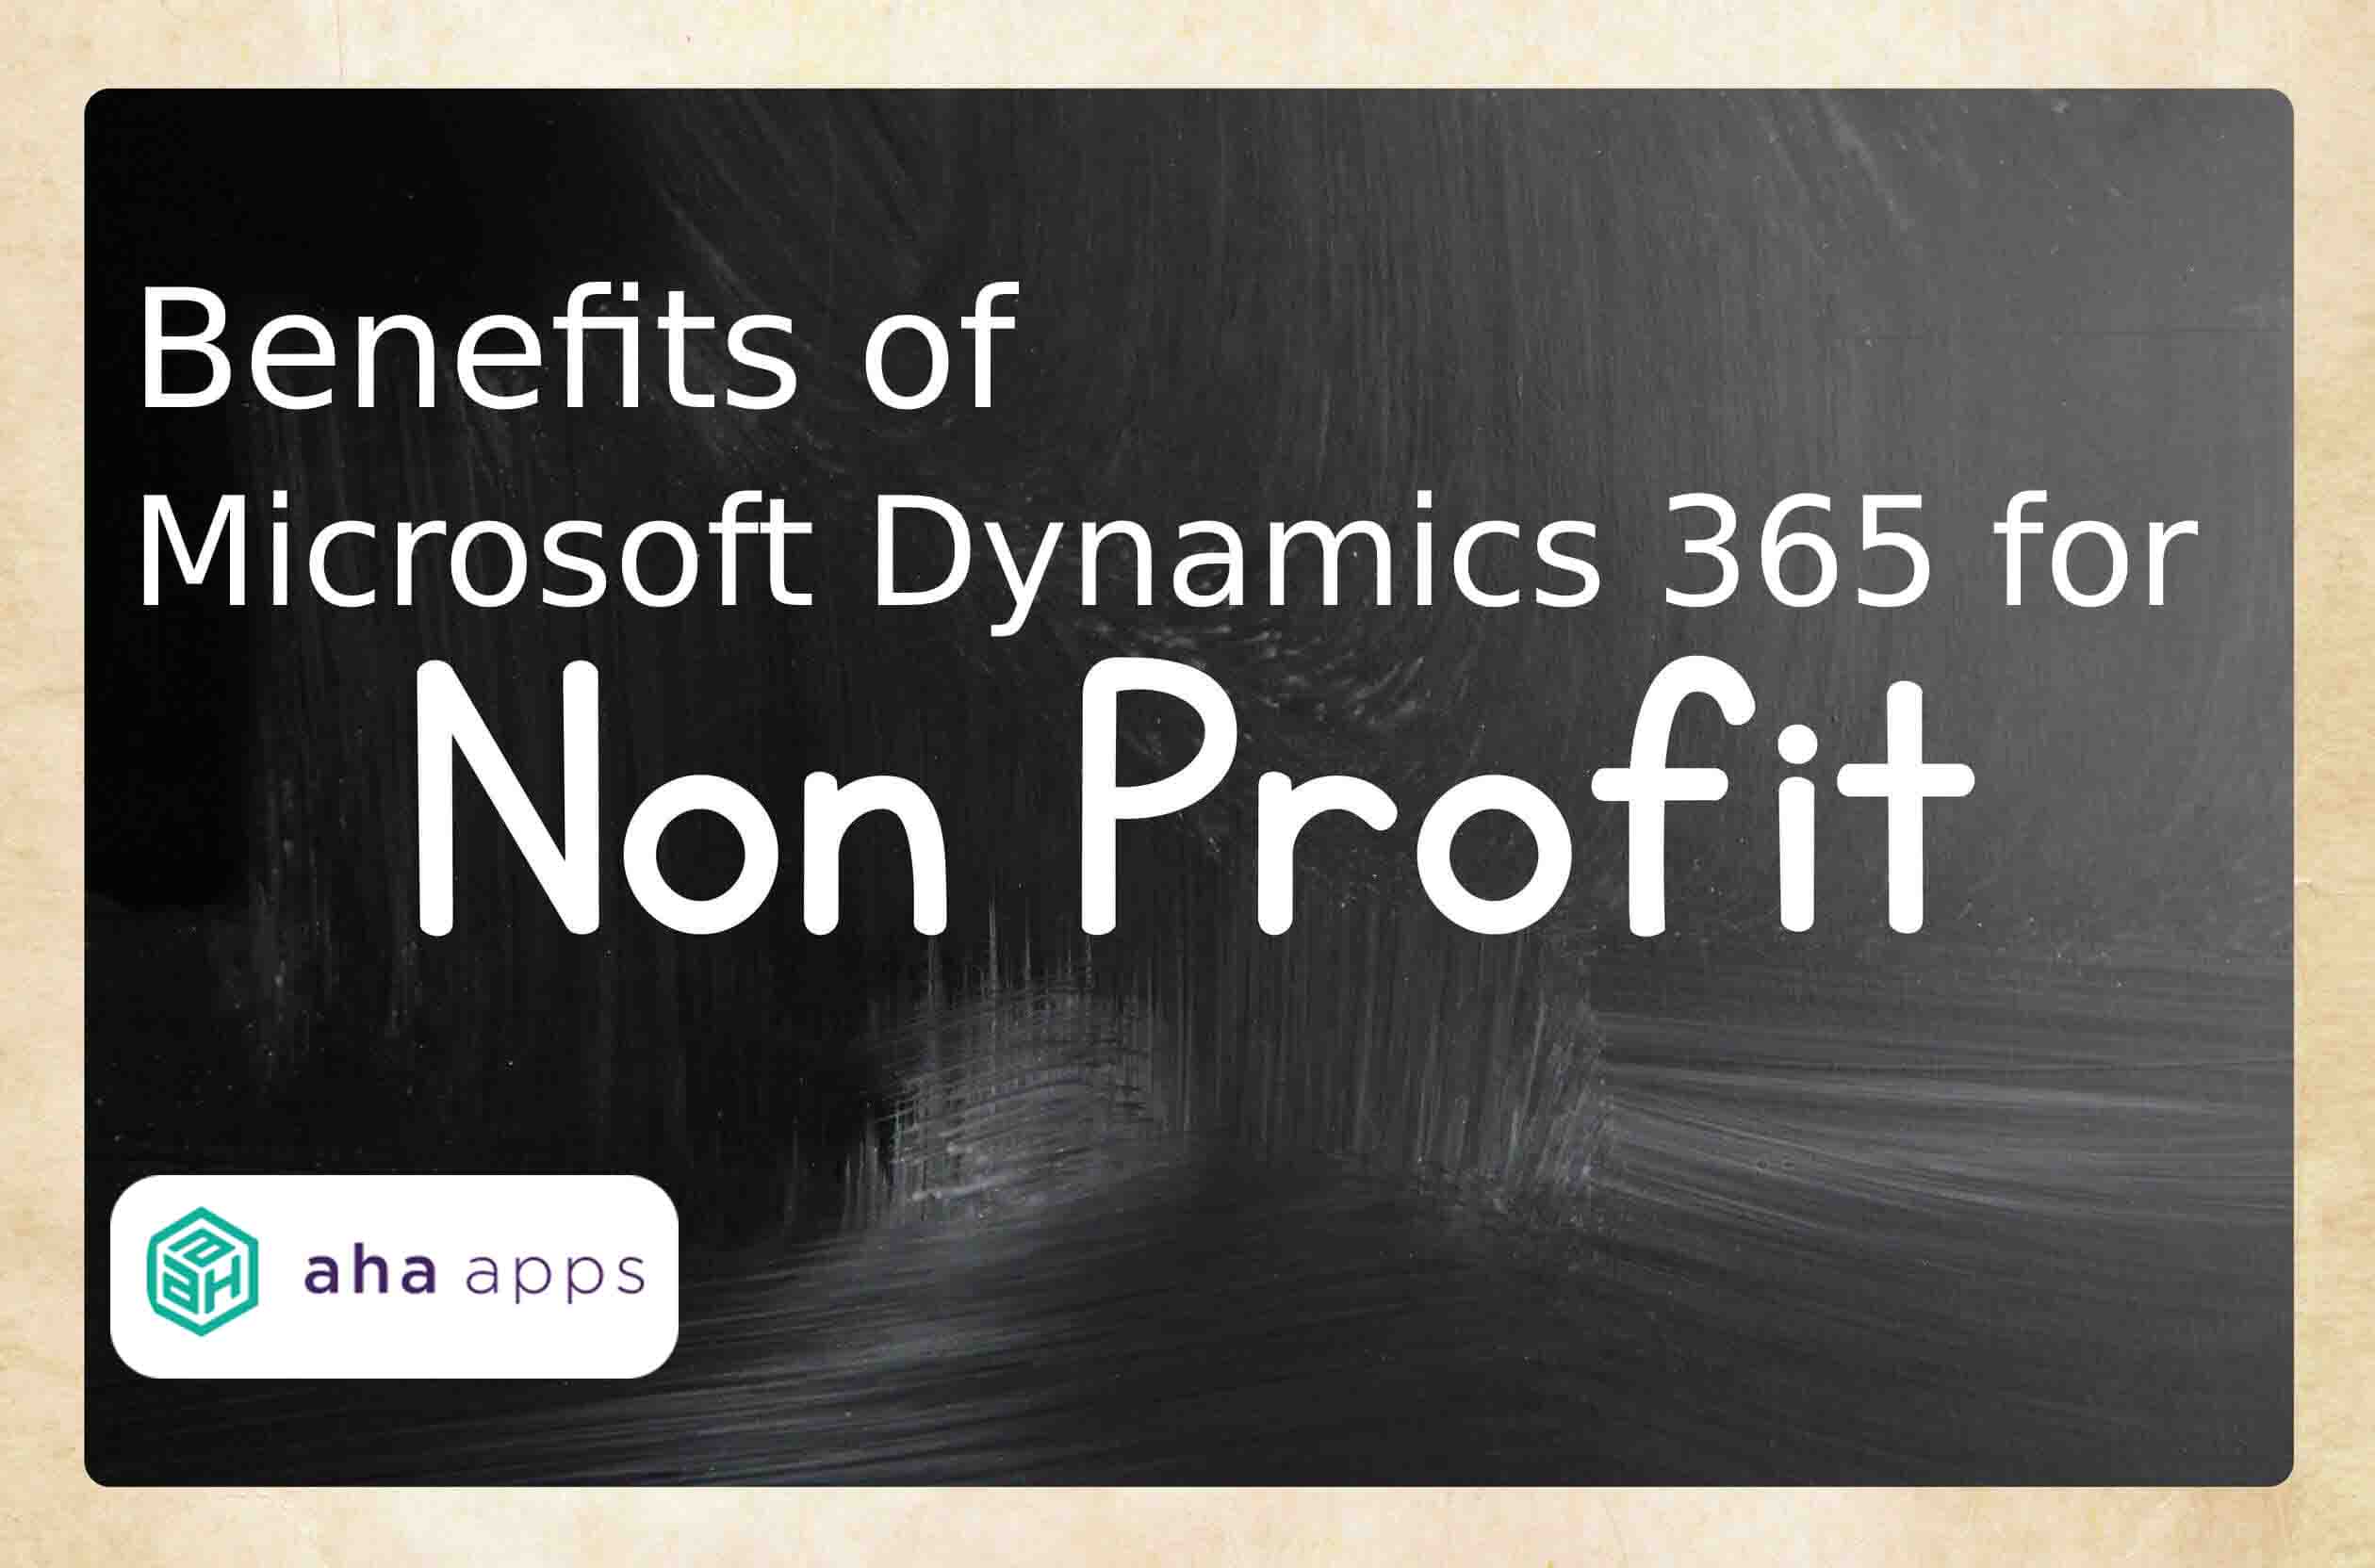 Benefits of Microsoft Dynamics 365 for nonprofits - AhaApps